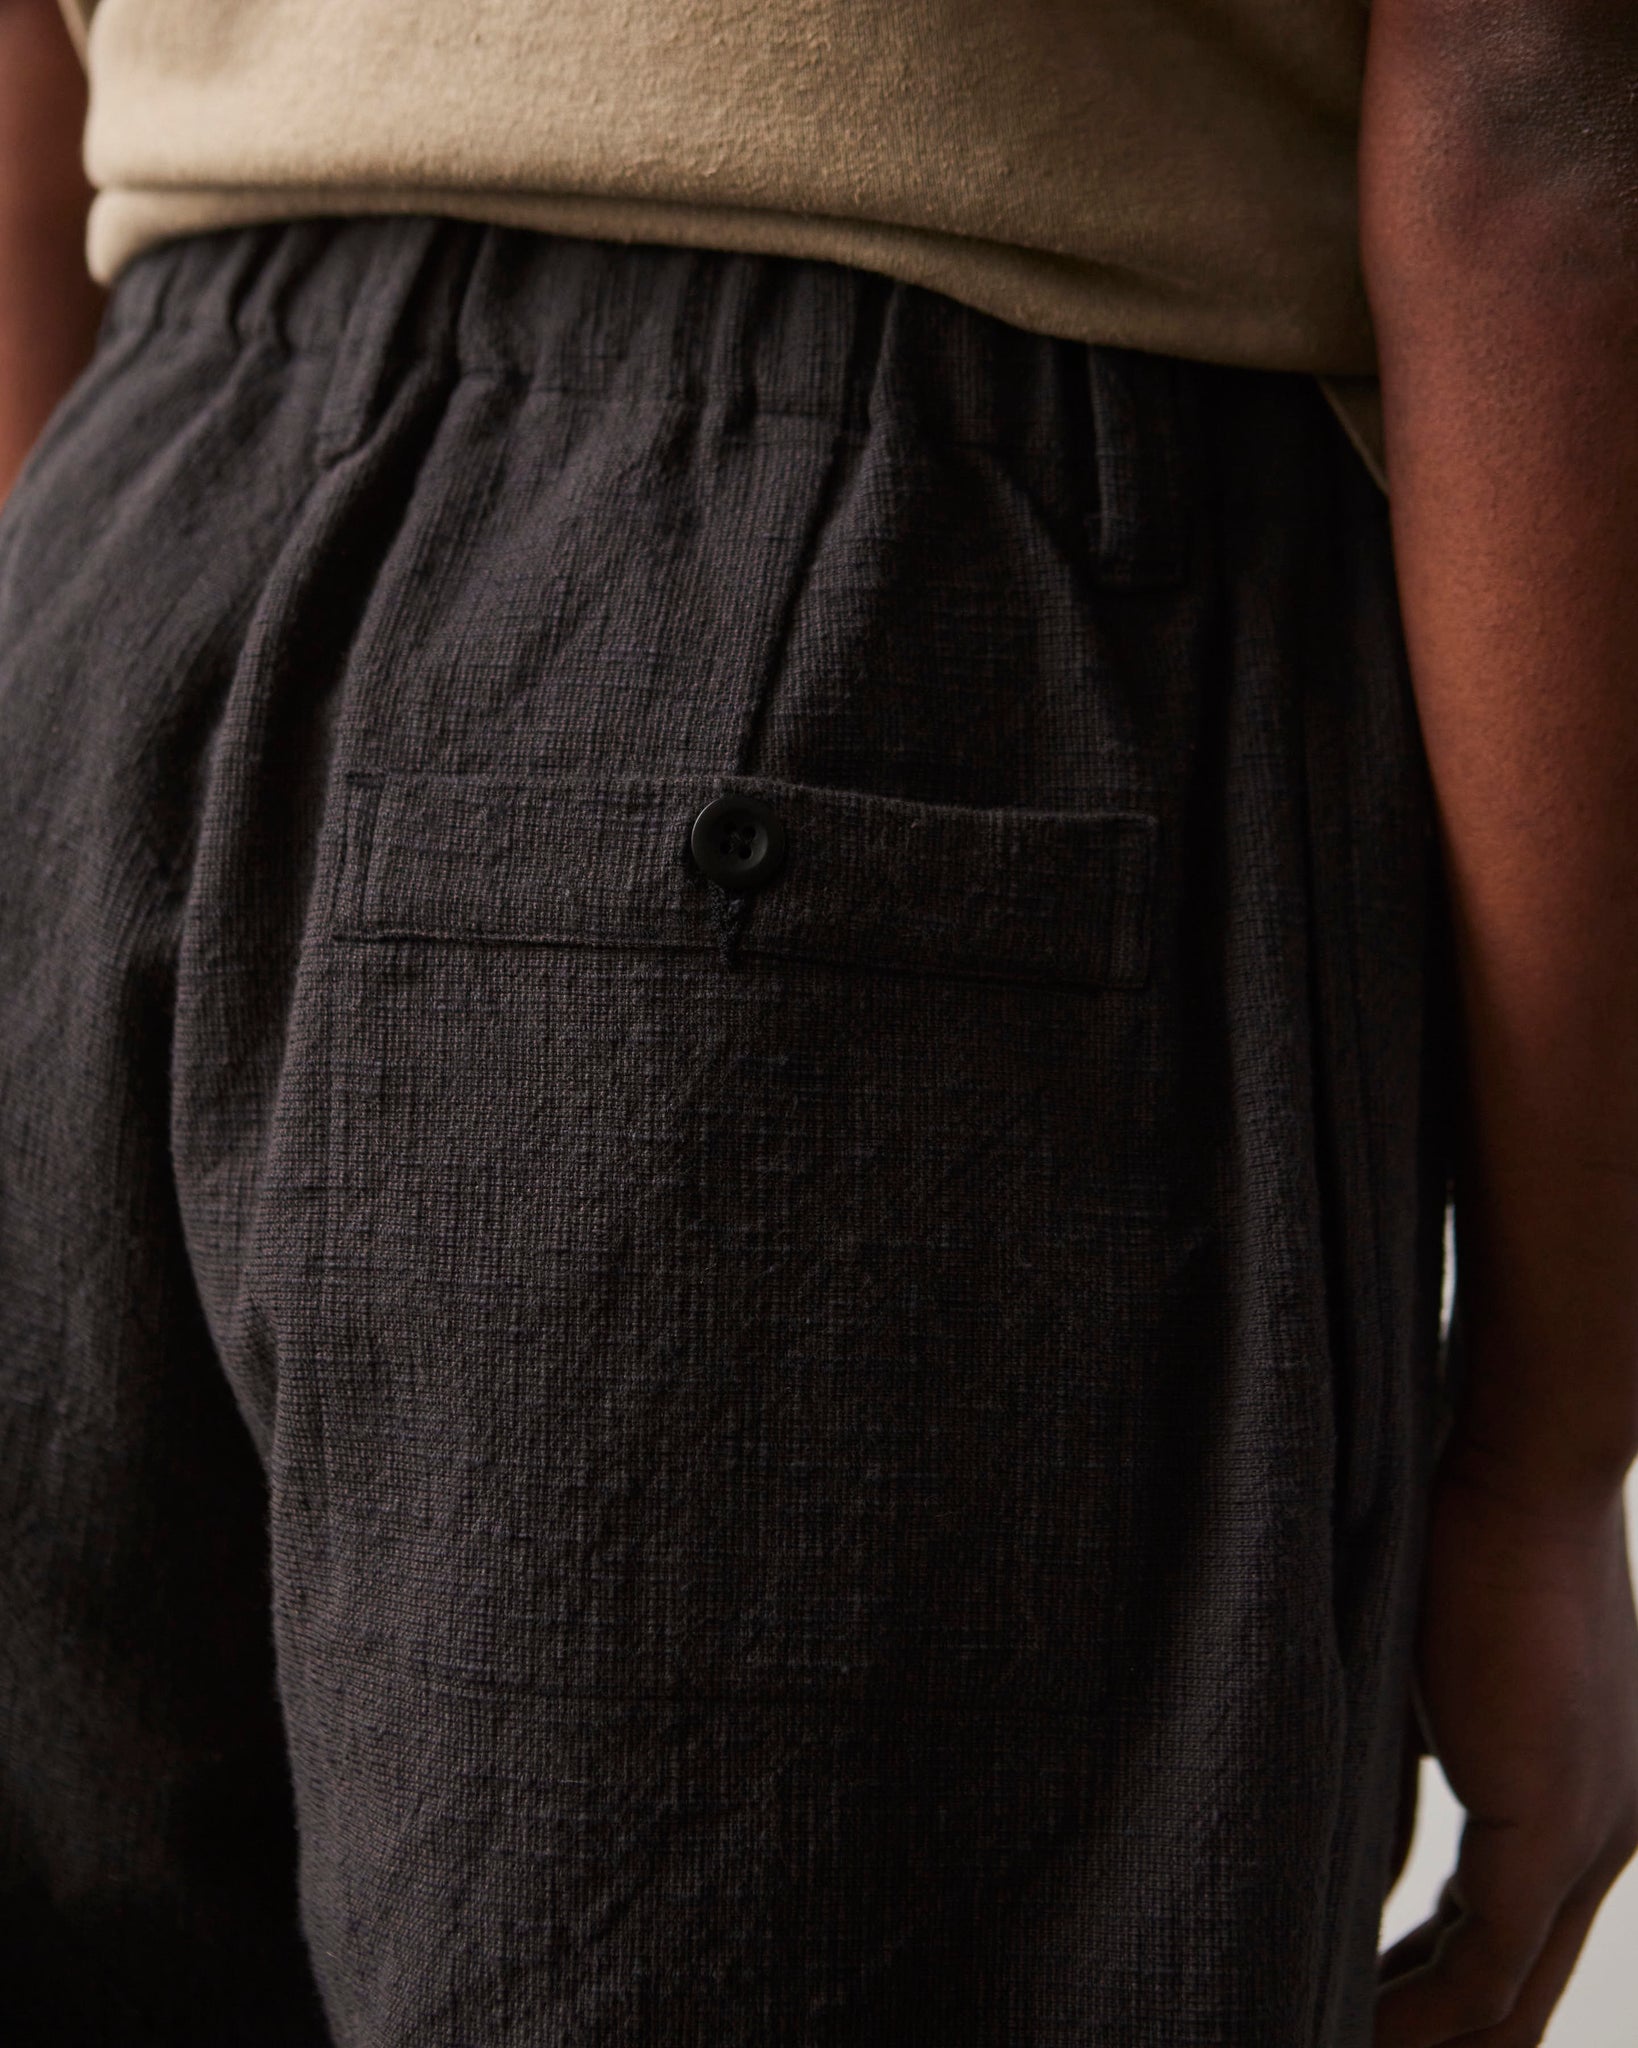 Evan Kinori Yarn Dyed Slub Cotton Elastic Pant, Brown/Navy